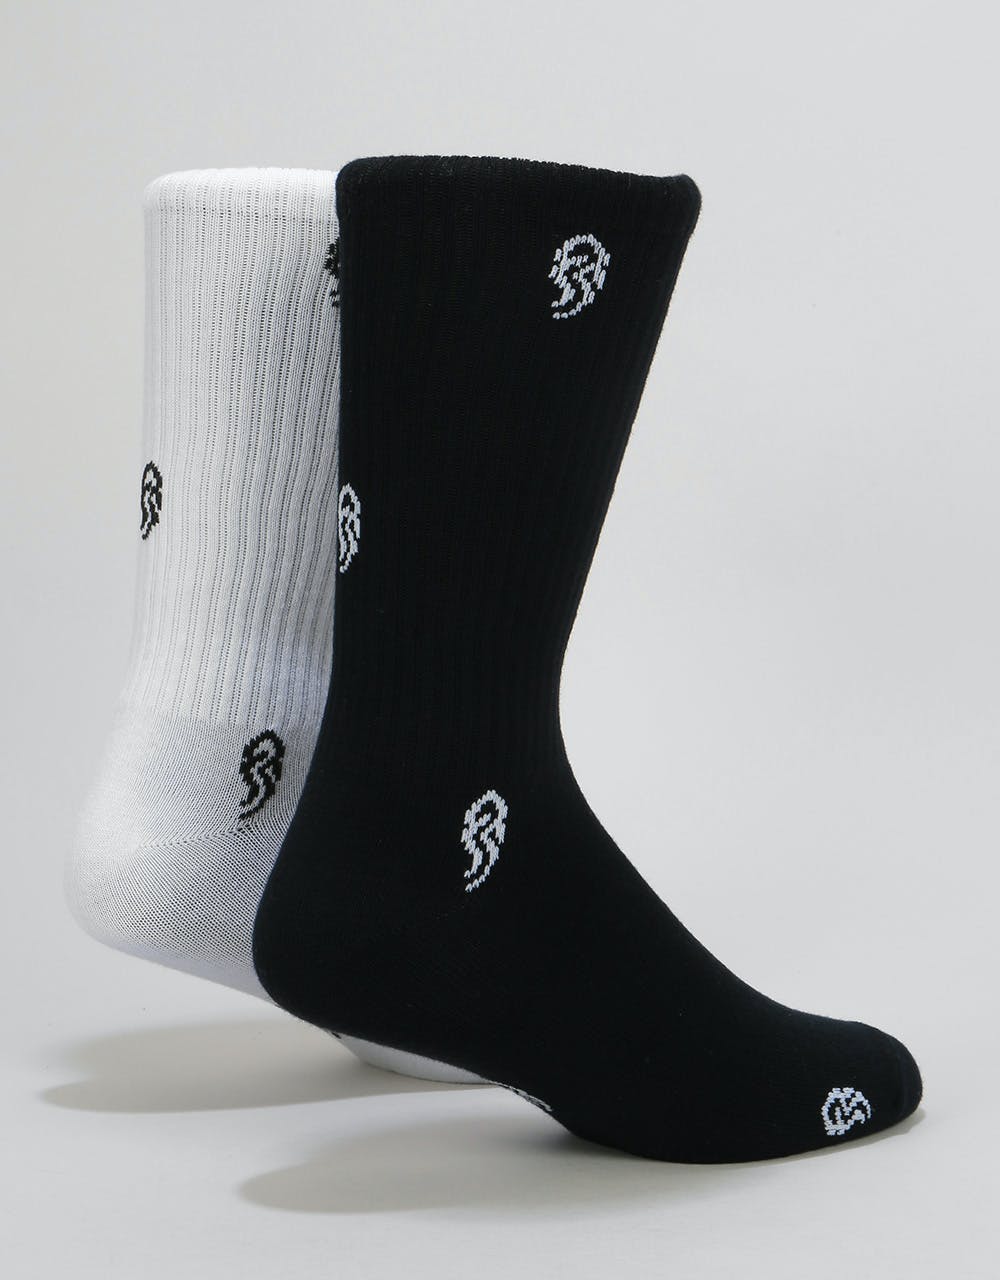 Santa Cruz Dressen Tribal Socks - Assorted